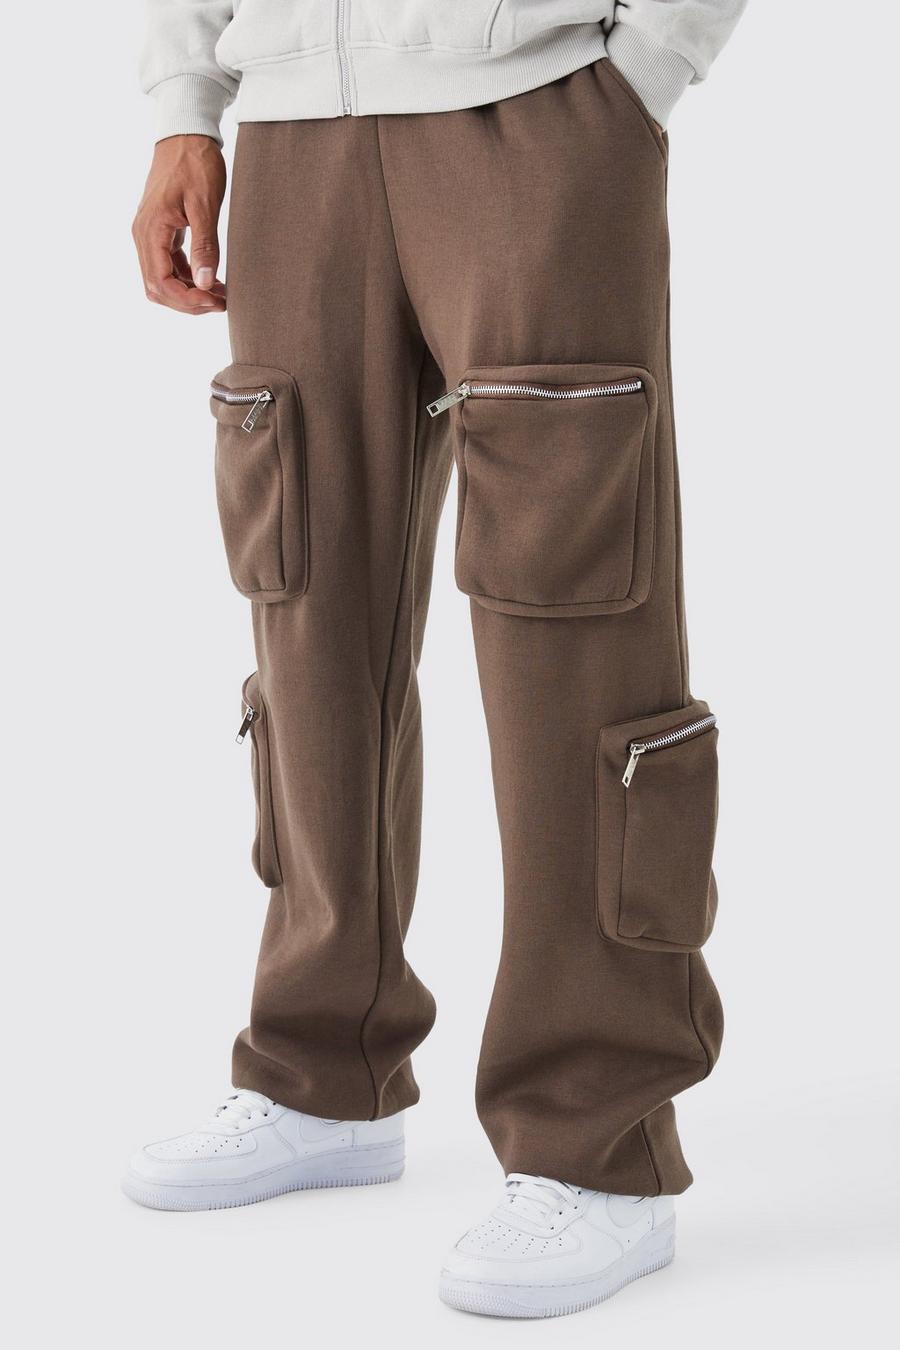 Pantaloni tuta Tall stile Utility stile Cargo, Coffee image number 1